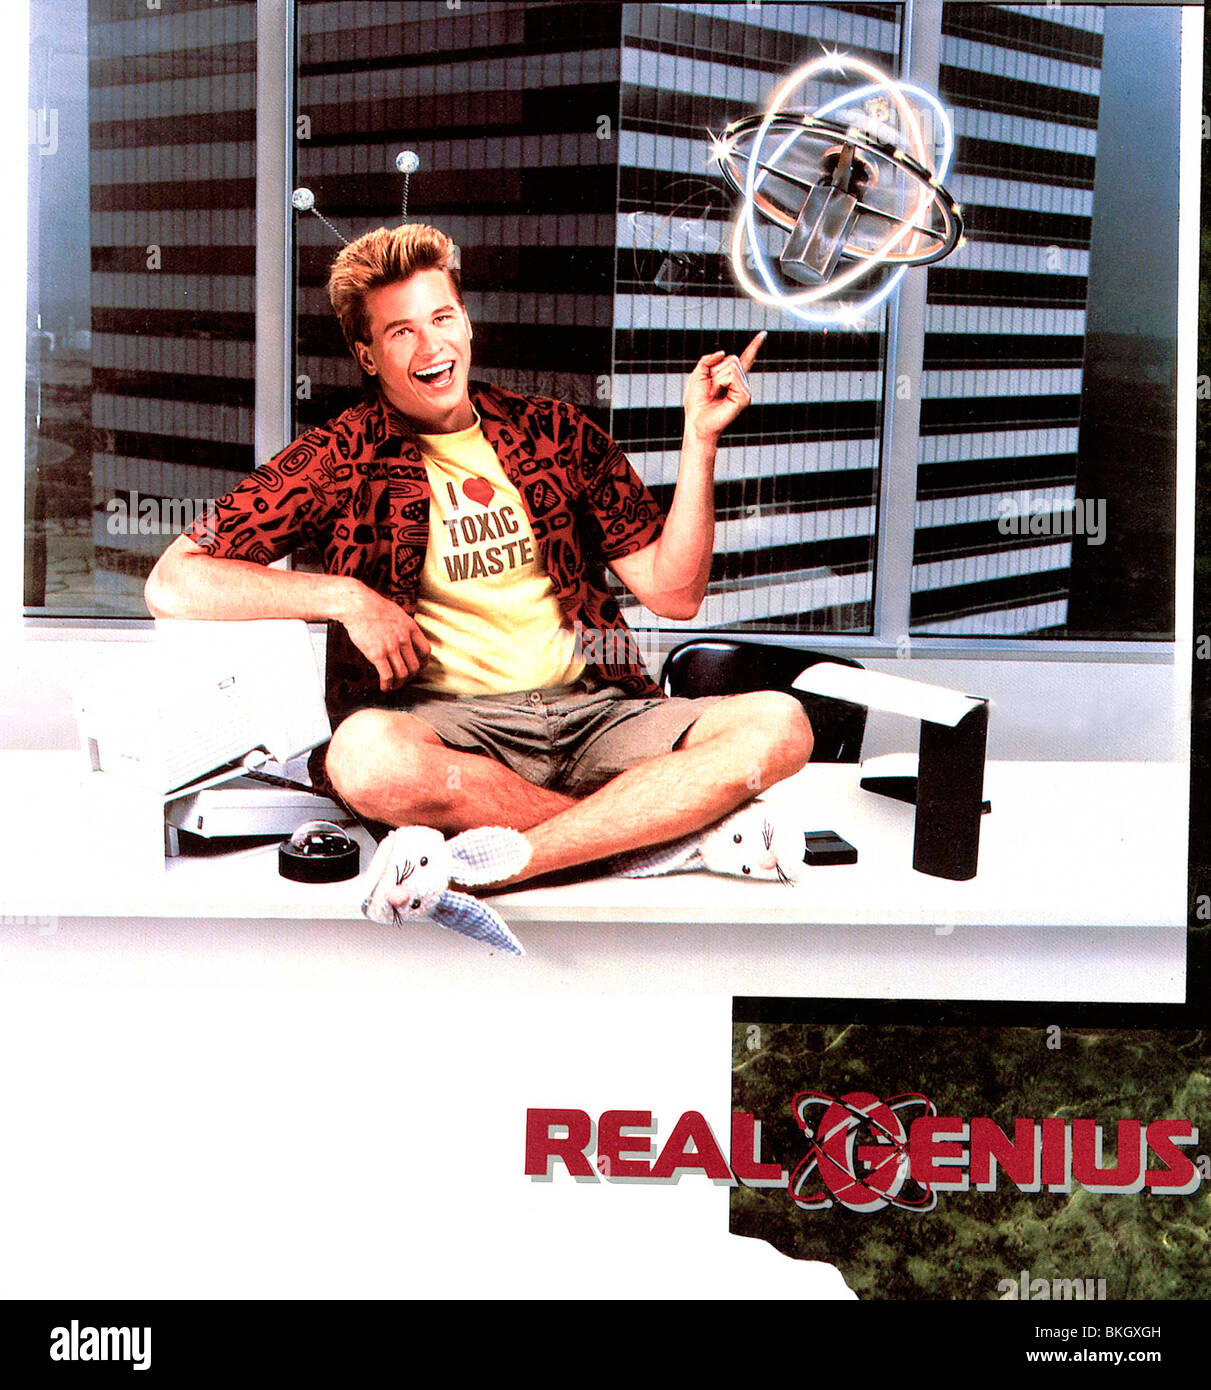 real-genius-1985-poster-BKGXGH.jpg